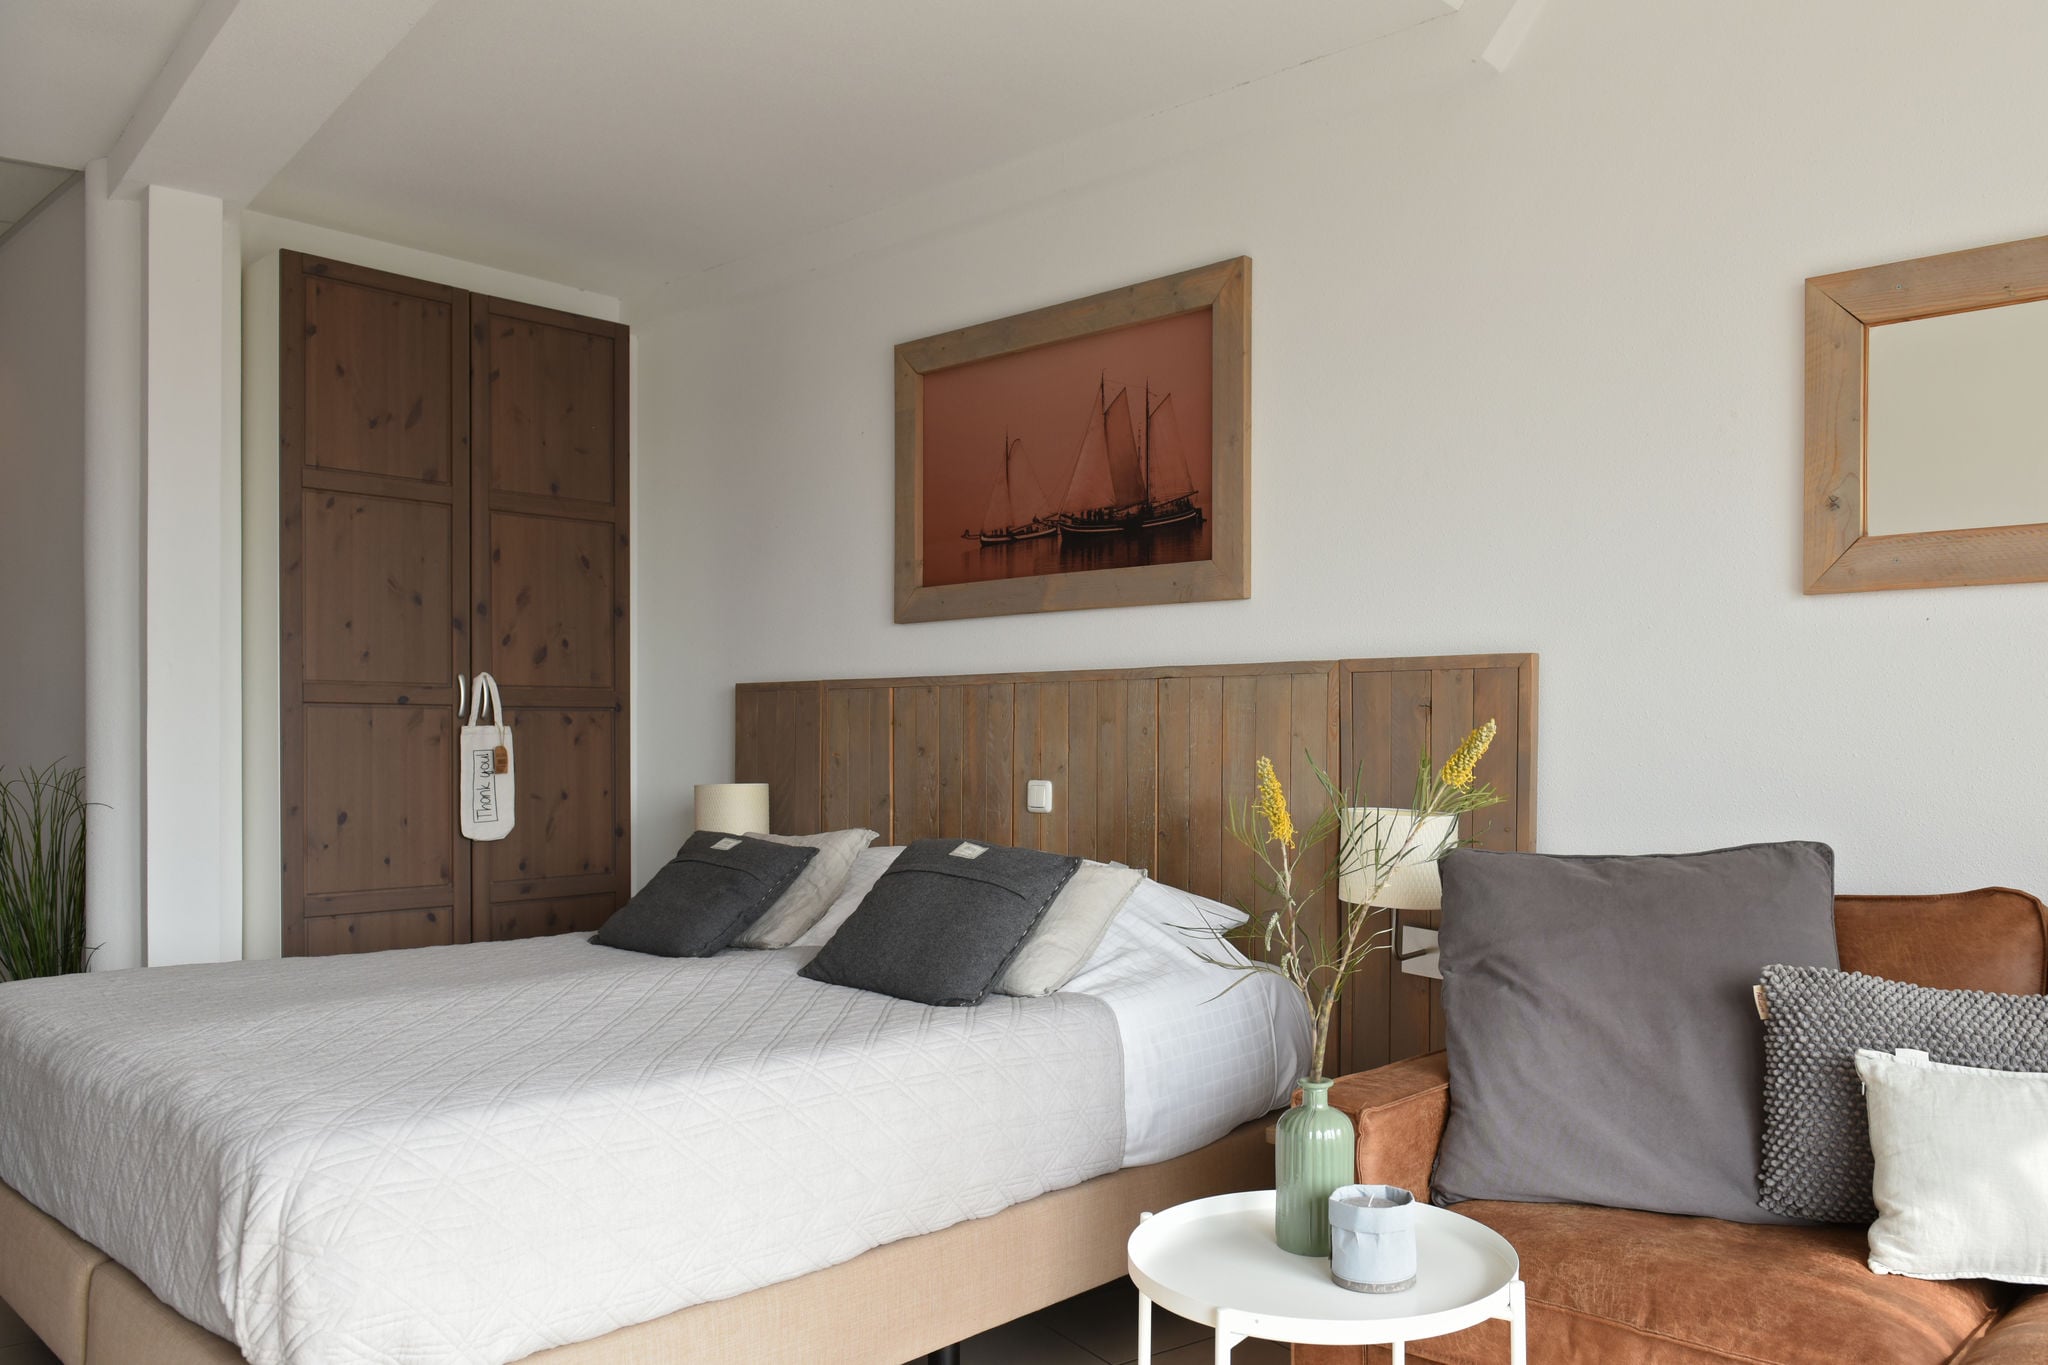 Moderne suites op loopafstand van strand en centrum van Callantsoog.